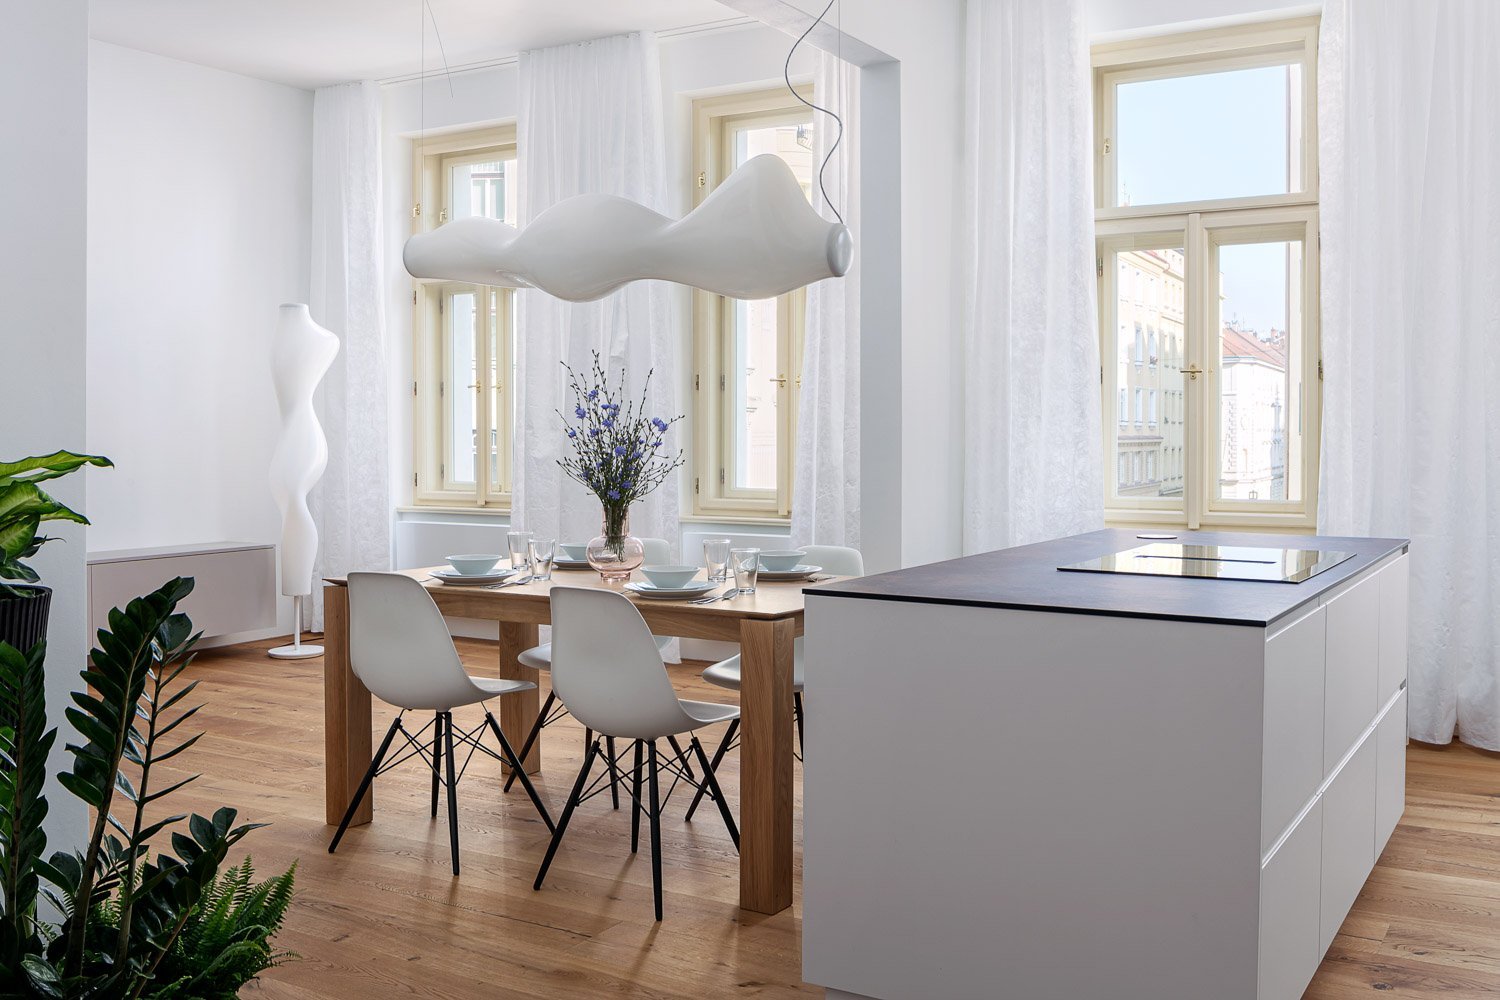 interior architecture photo of kitchen by esarch skalicka, jiri lizler architecture photographer.jpg